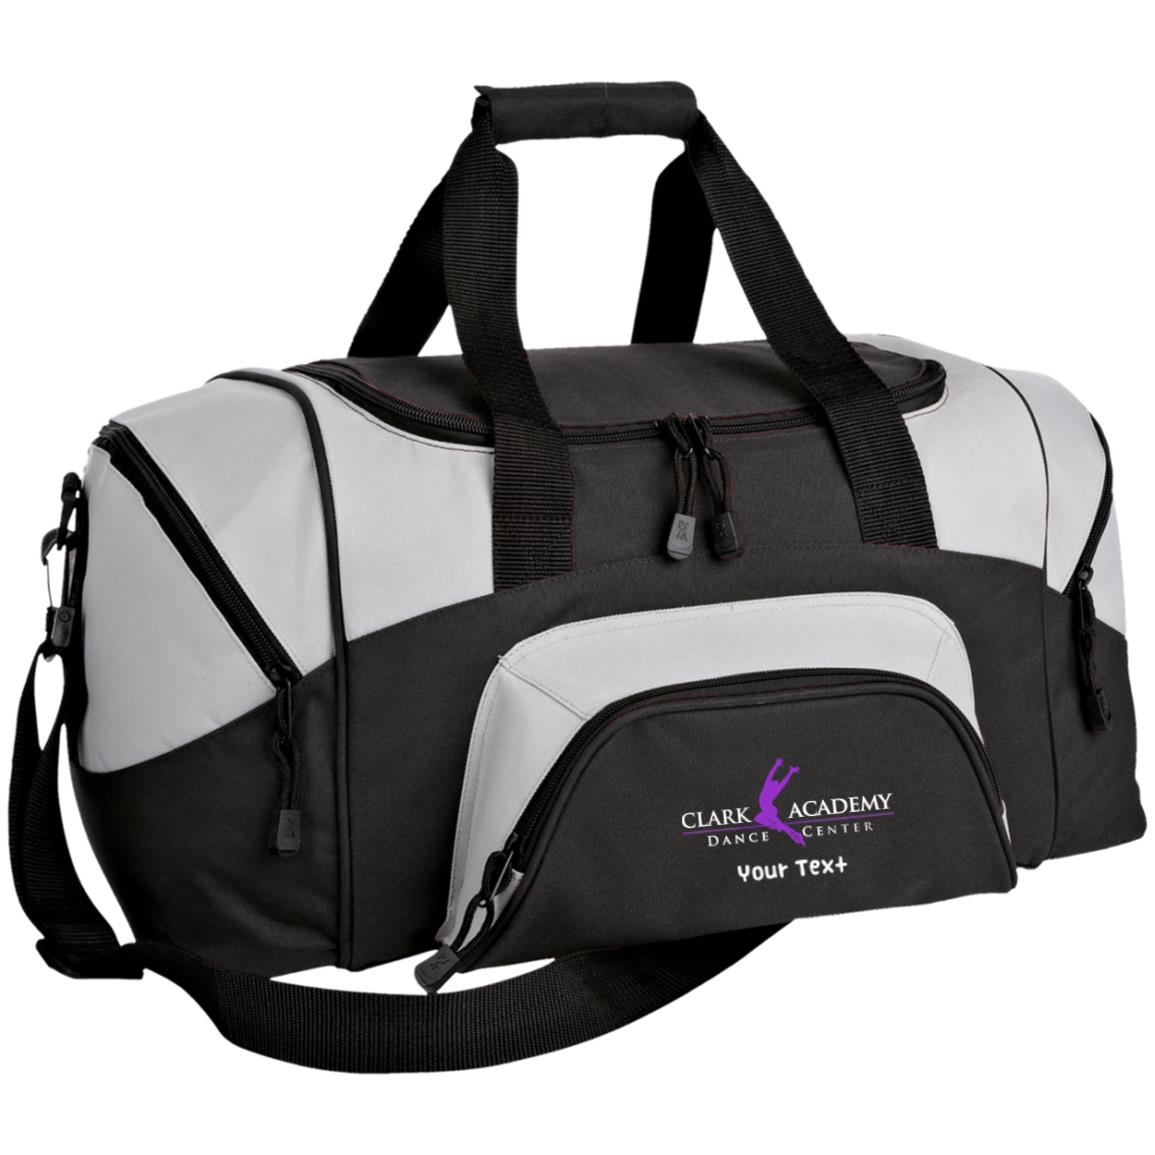 CADC Small Duffel Bag - Free Personalization